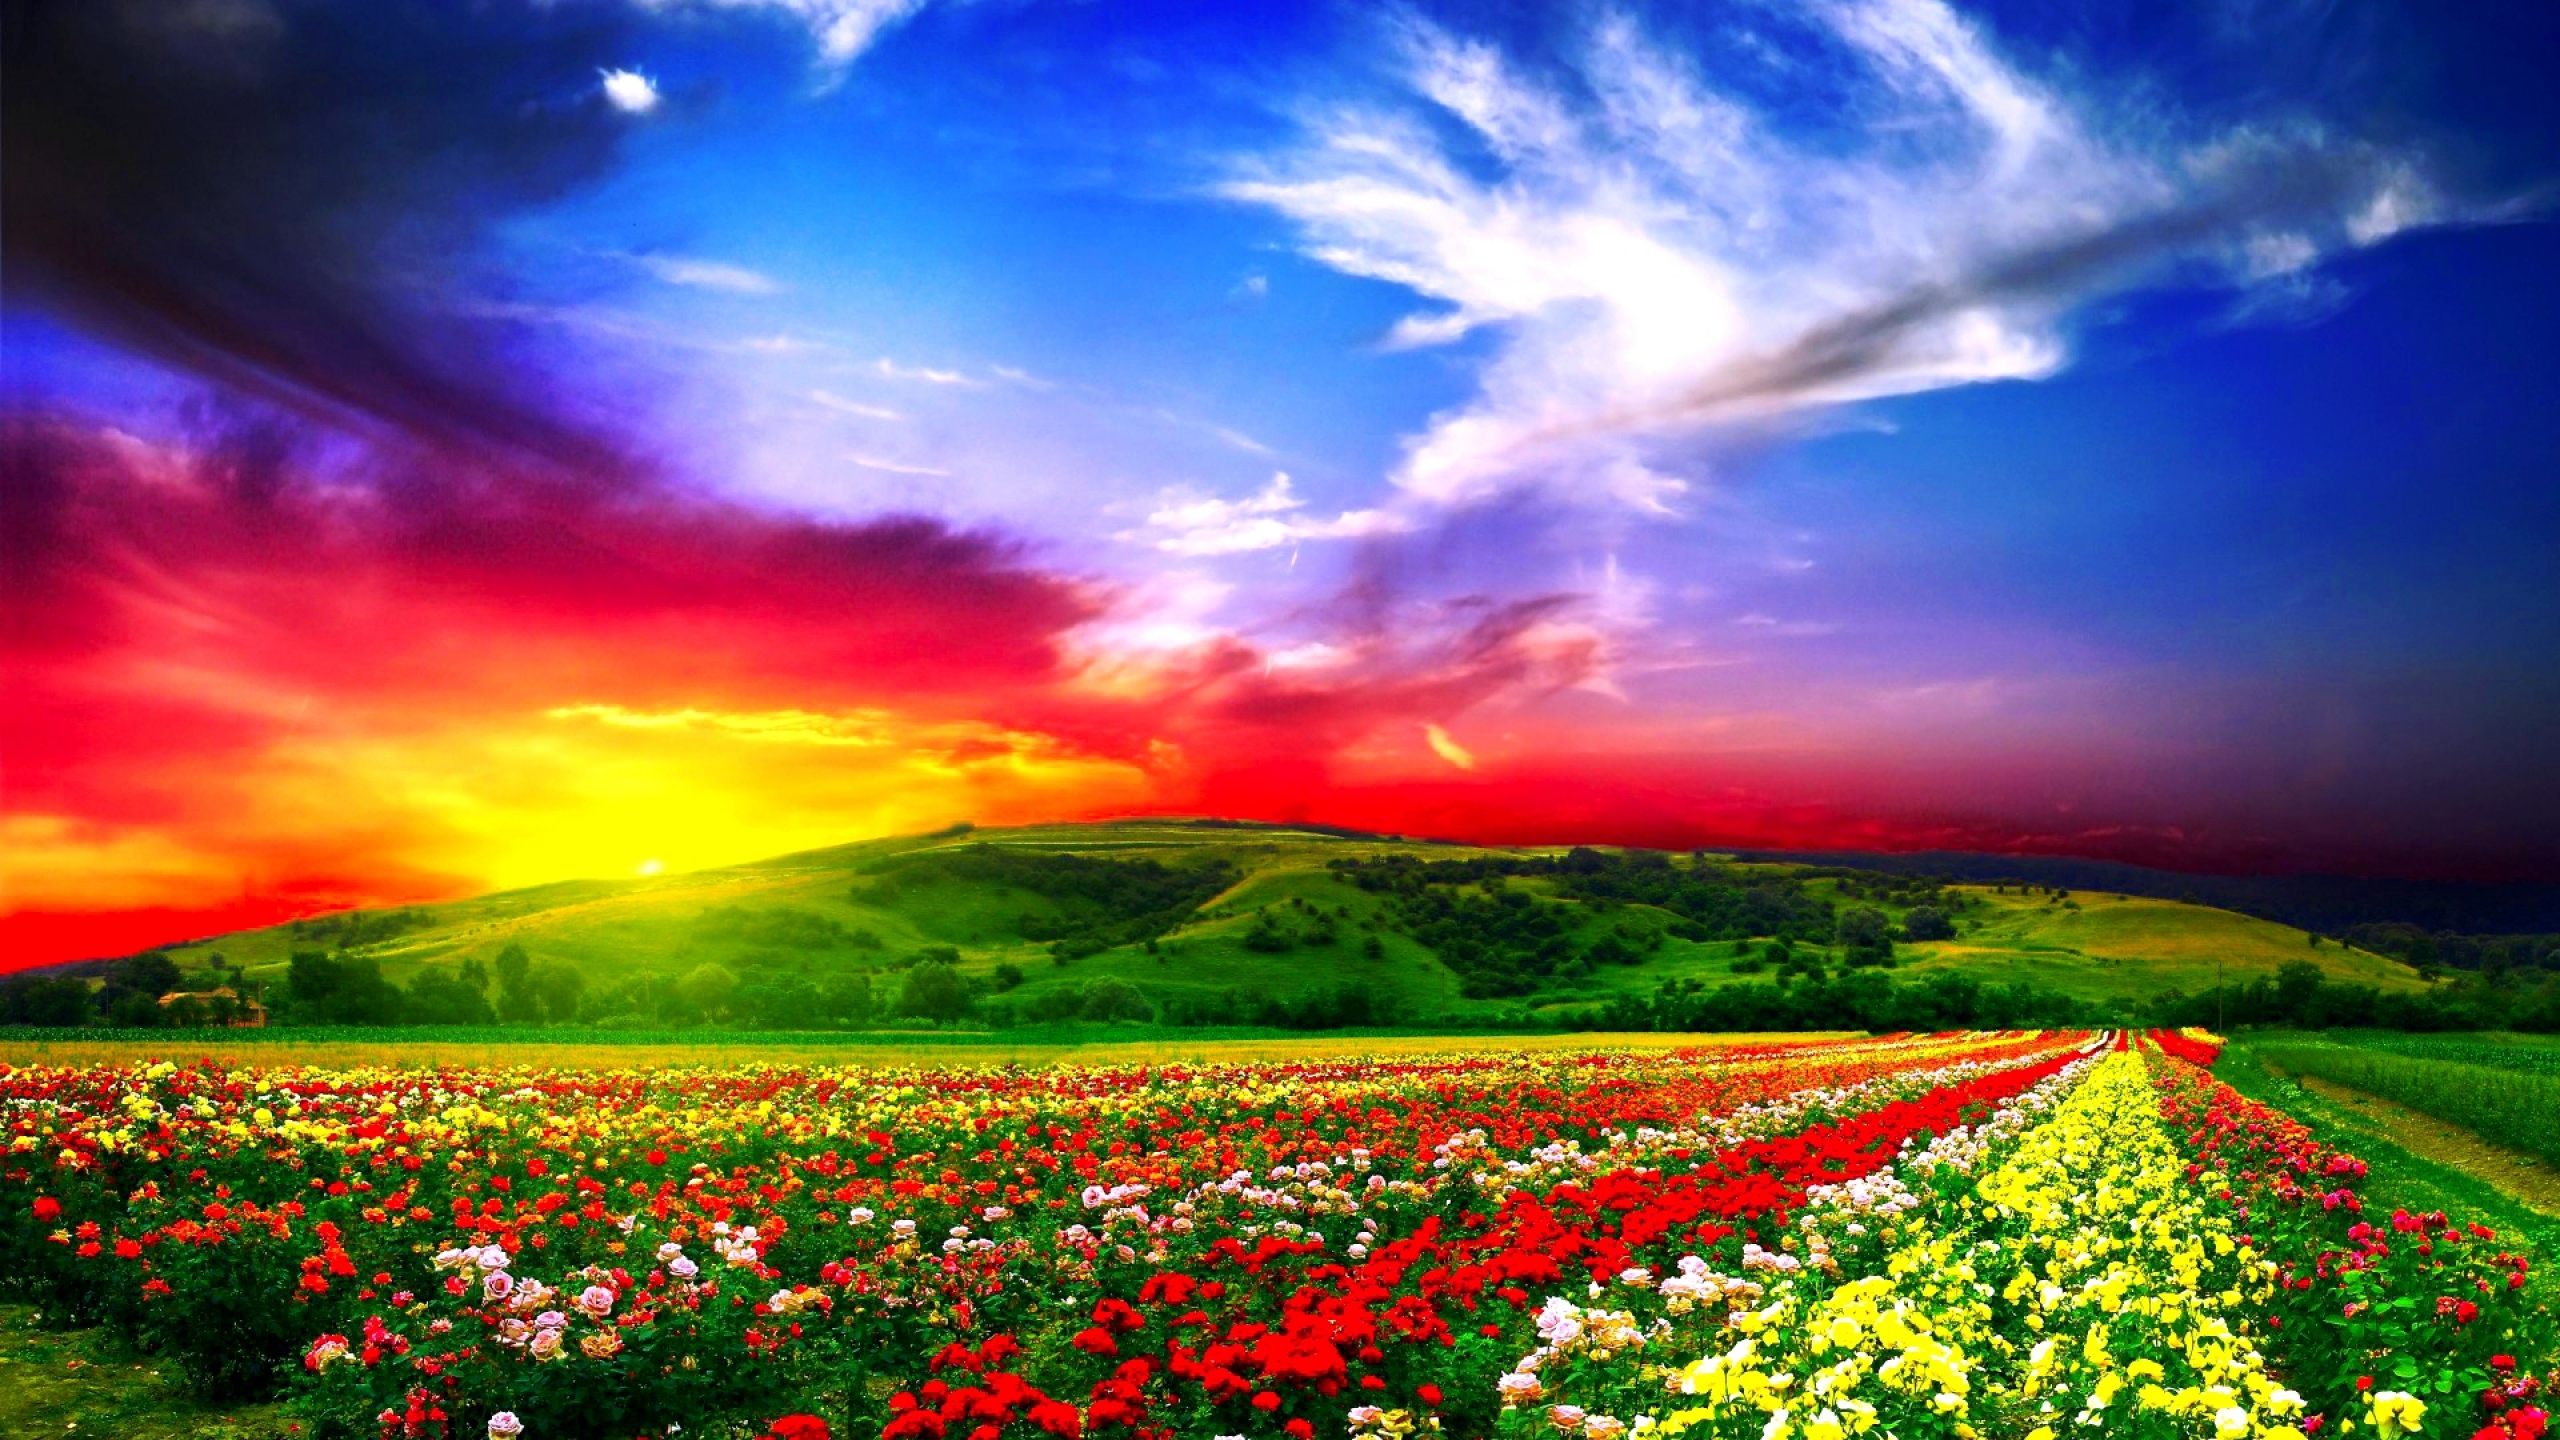 Download Wallpaper 2560x1440 Flowers, Field, Beautiful Mac iMac 27 ...